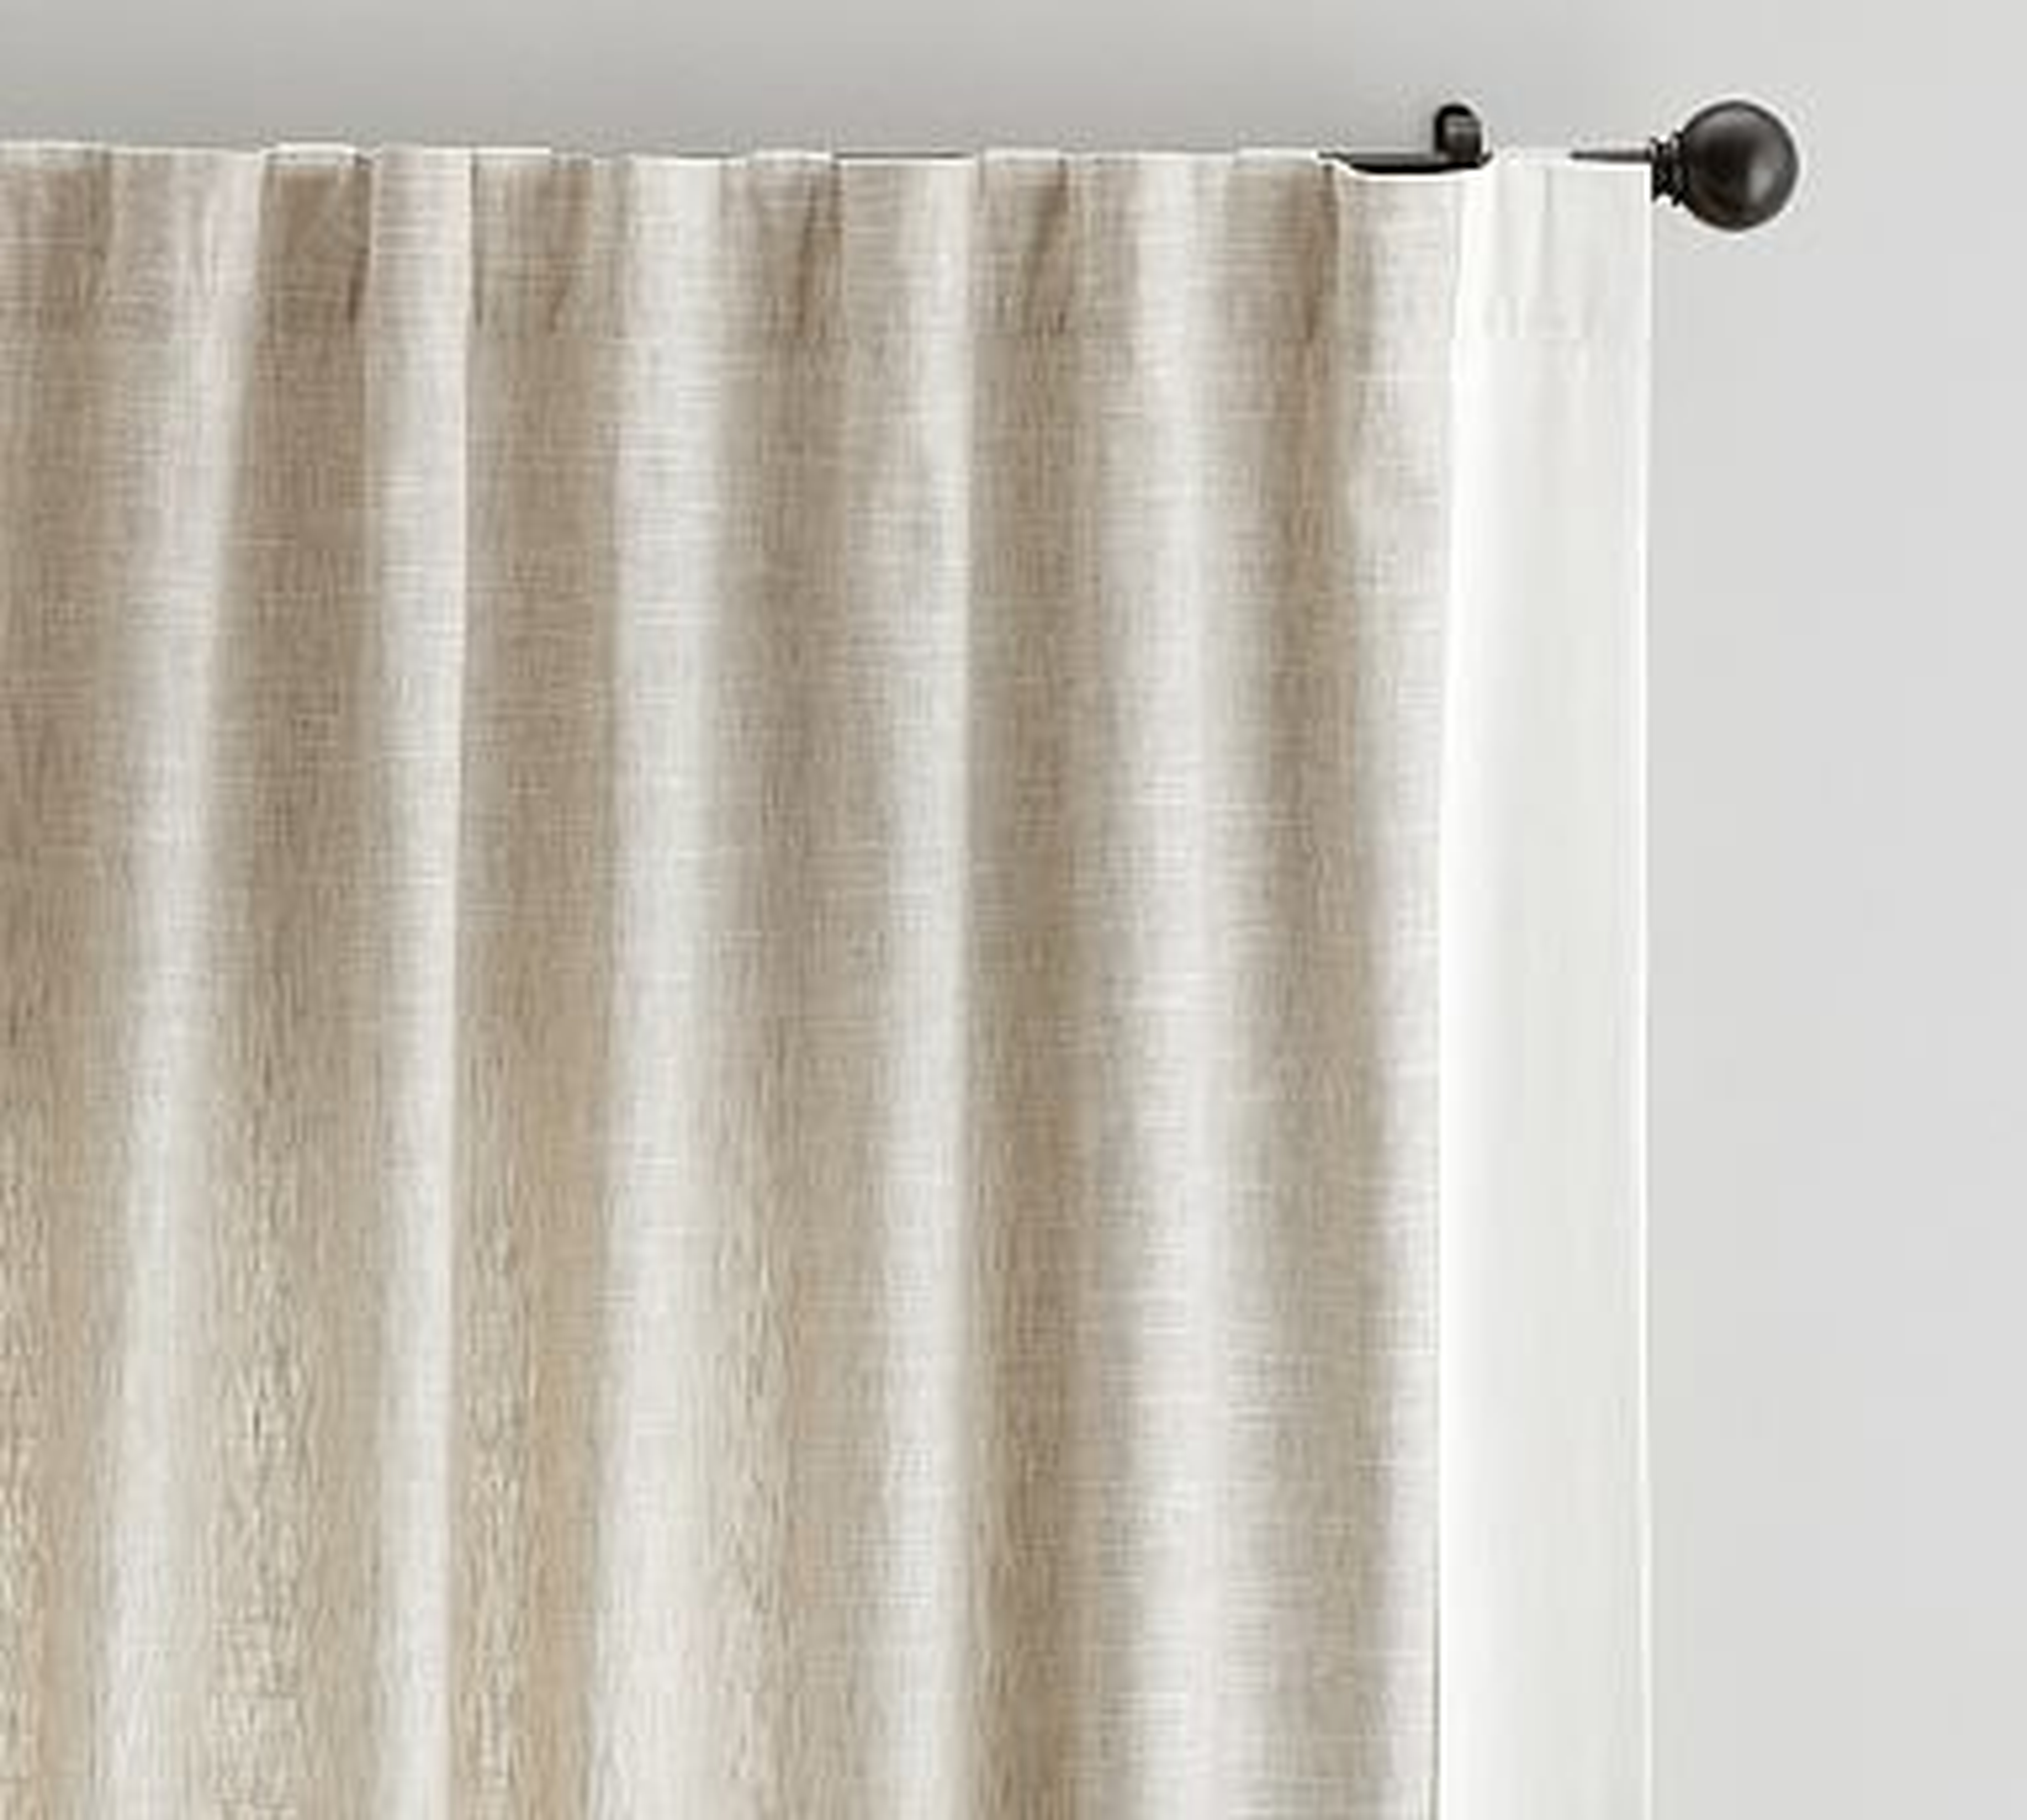 Emery Framed Border Linen Curtain, 50 x 108", Oatmeal/Ivory - Pottery Barn